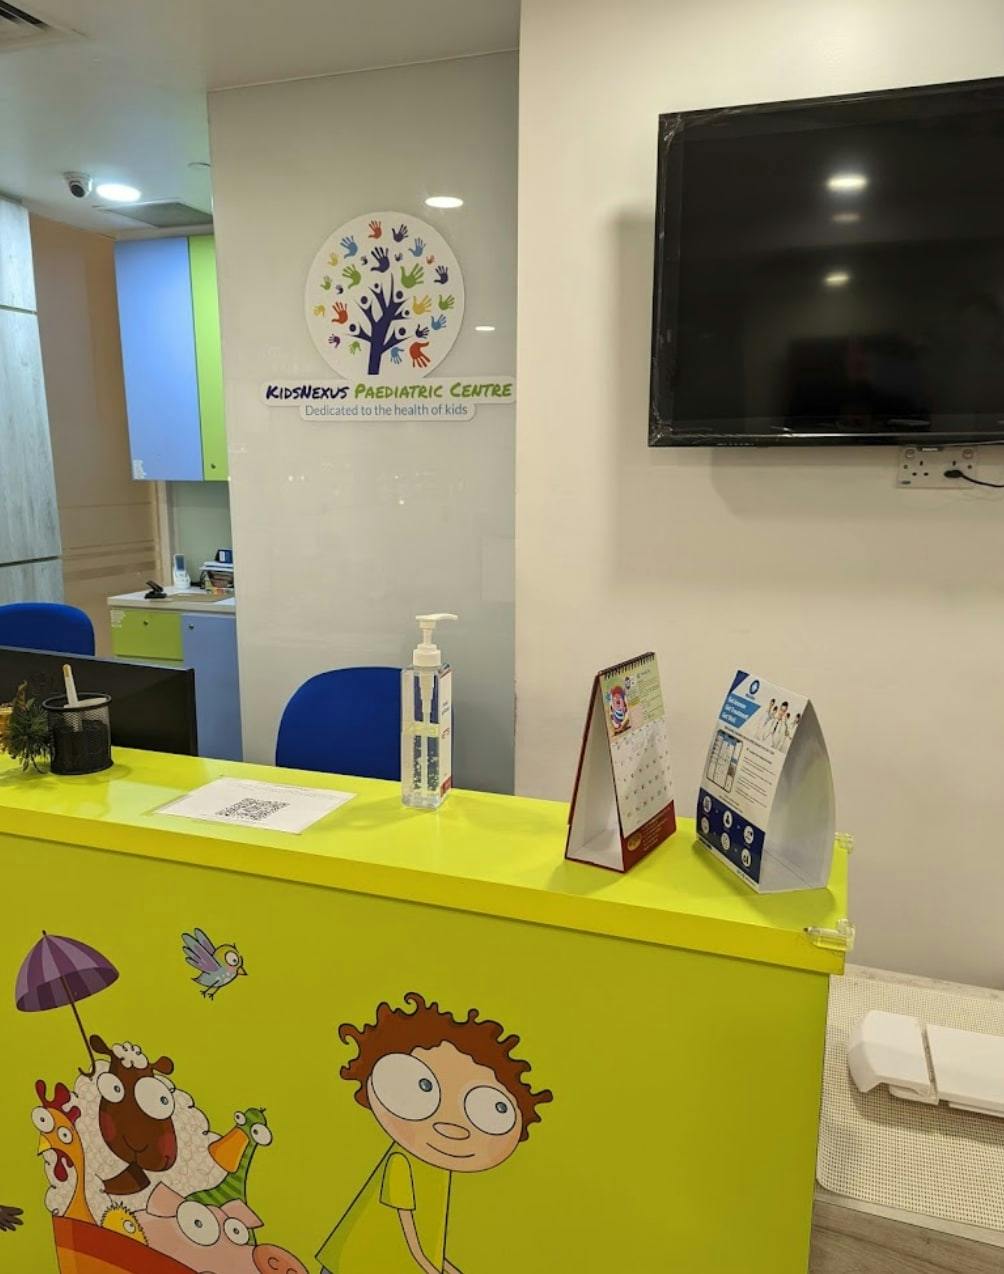 KidsNexus Paediatric Centre